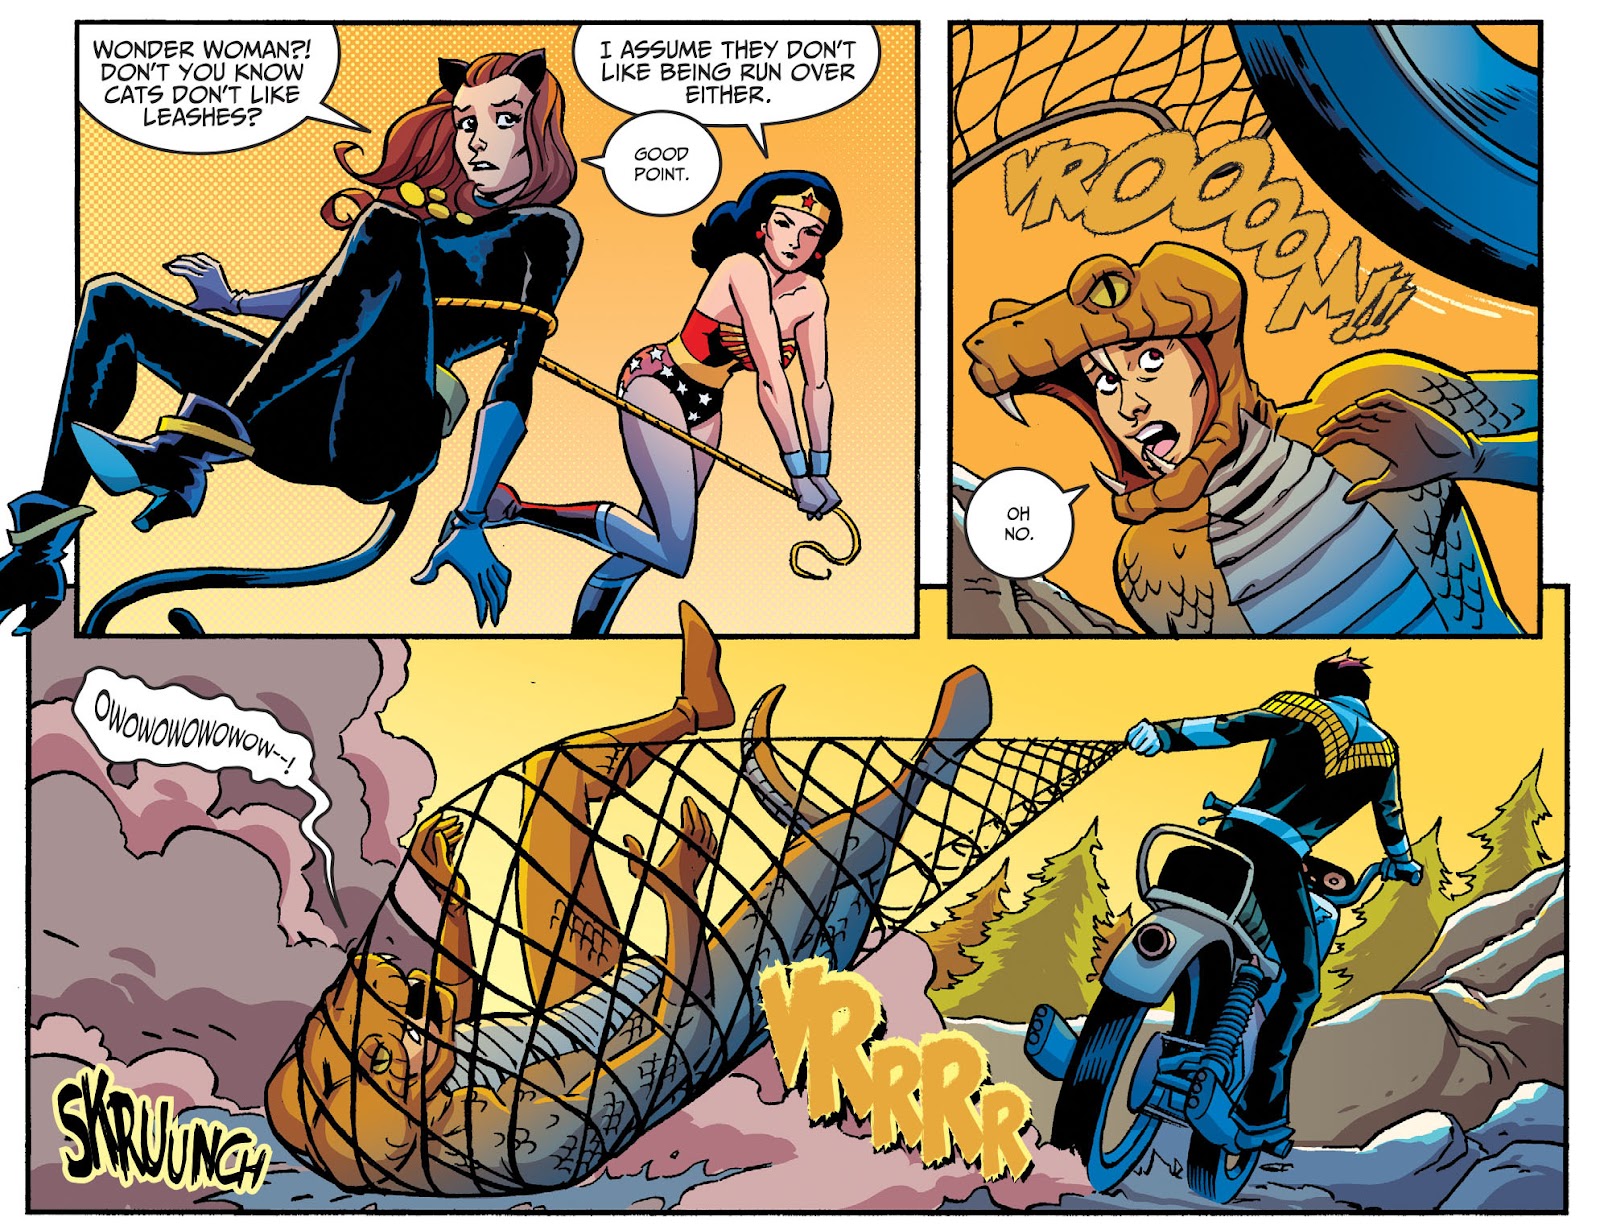 Batman '66 Meets Wonder Woman '77 issue 10 - Page 5